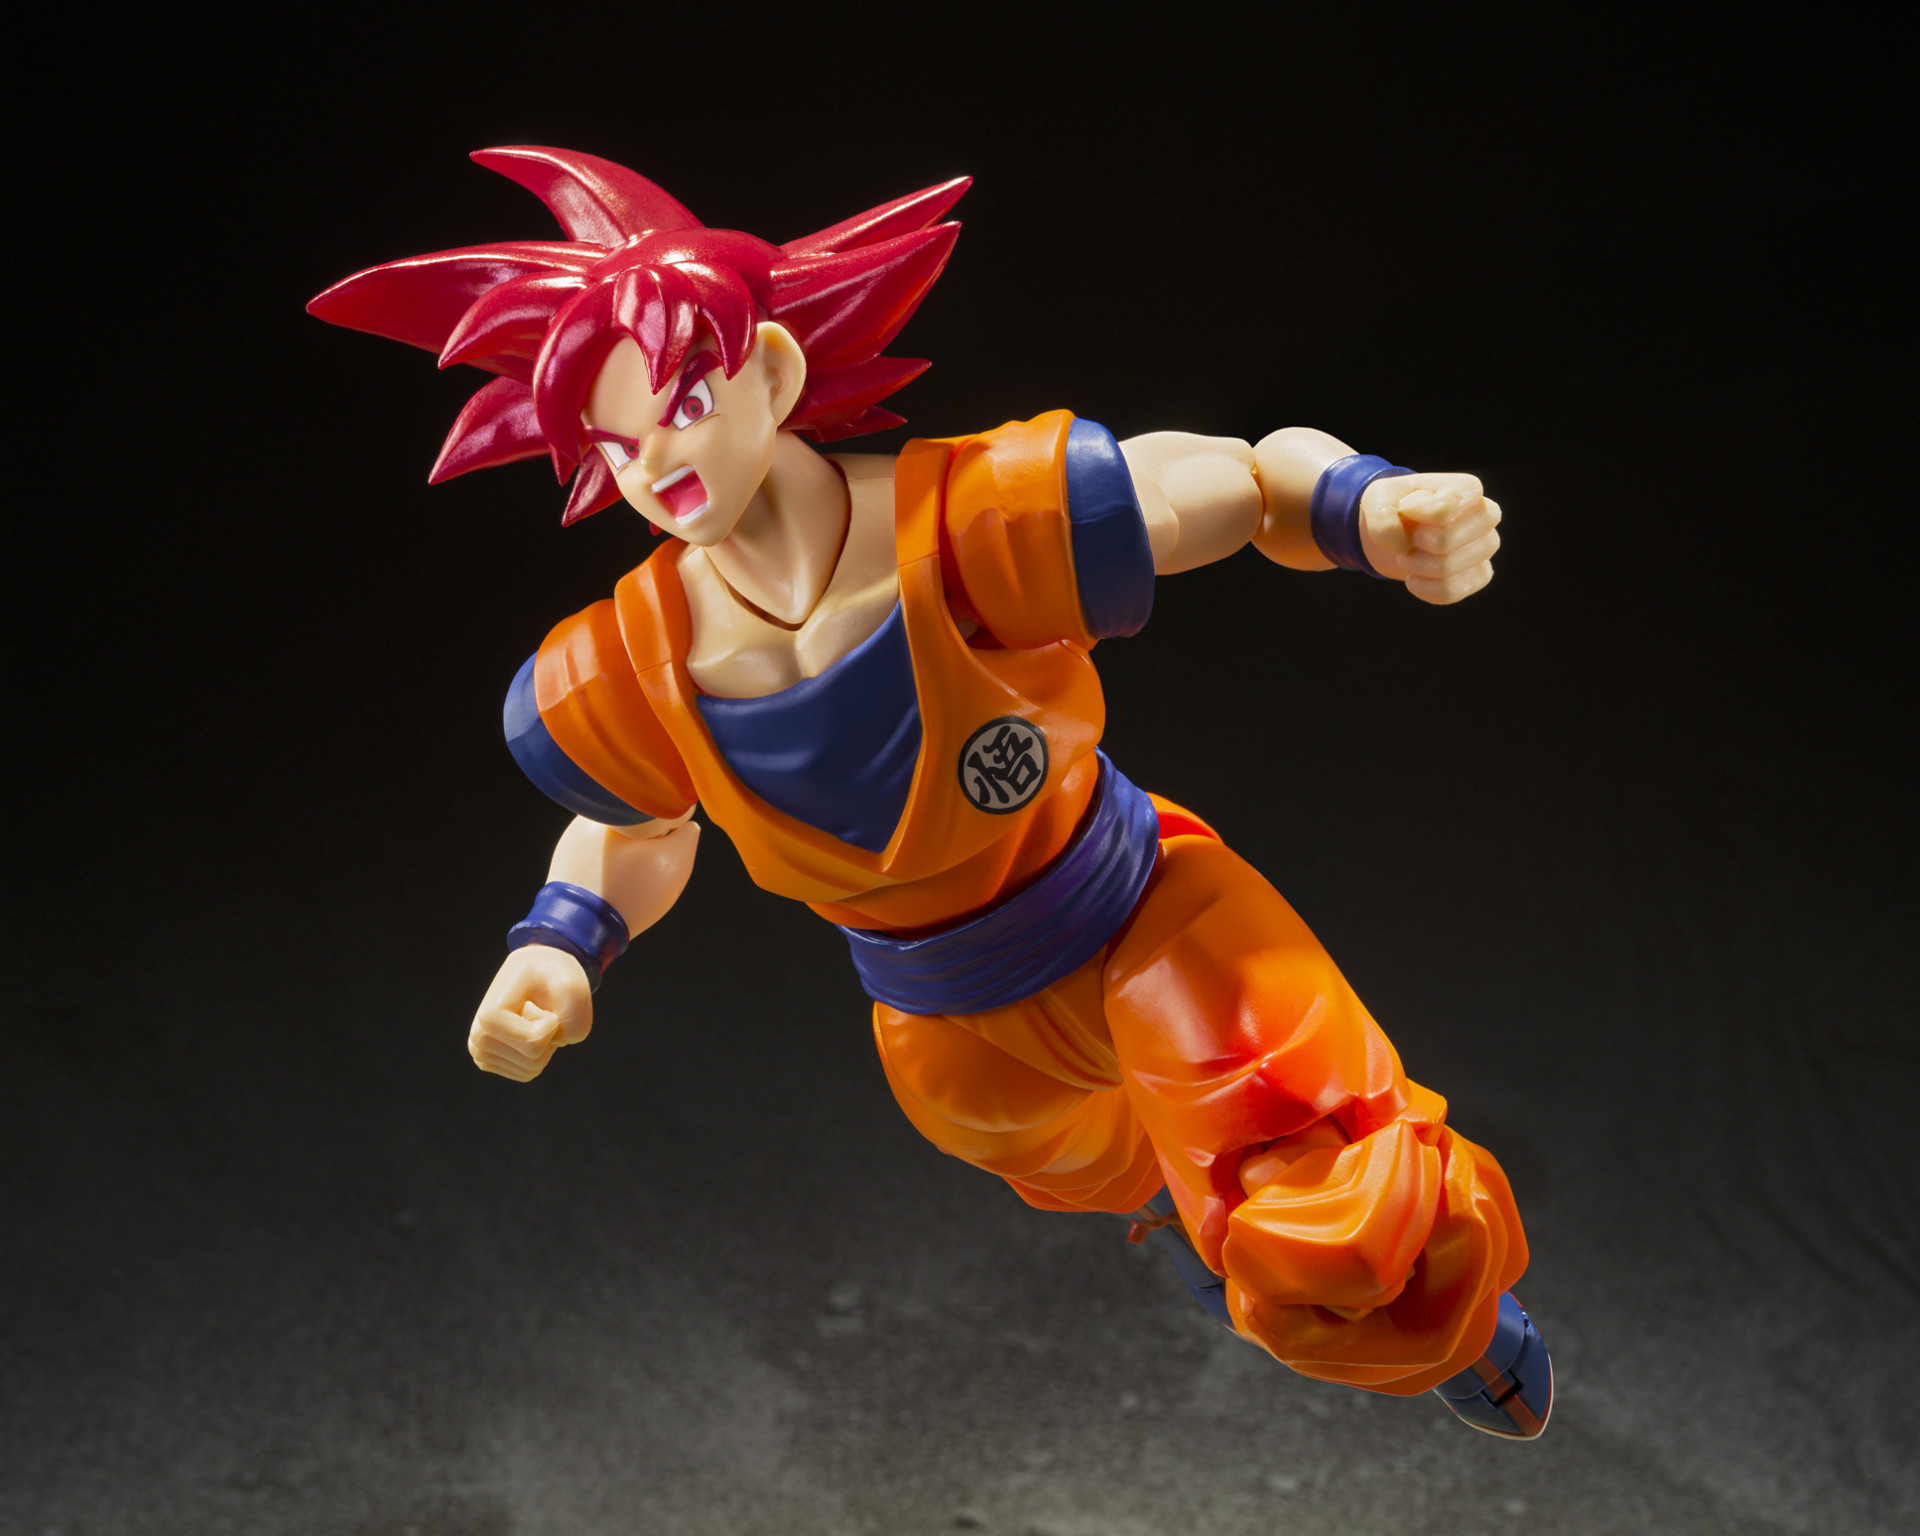 Son Goku Super Saiyan God (Red and Blue) Dragon Ball Super